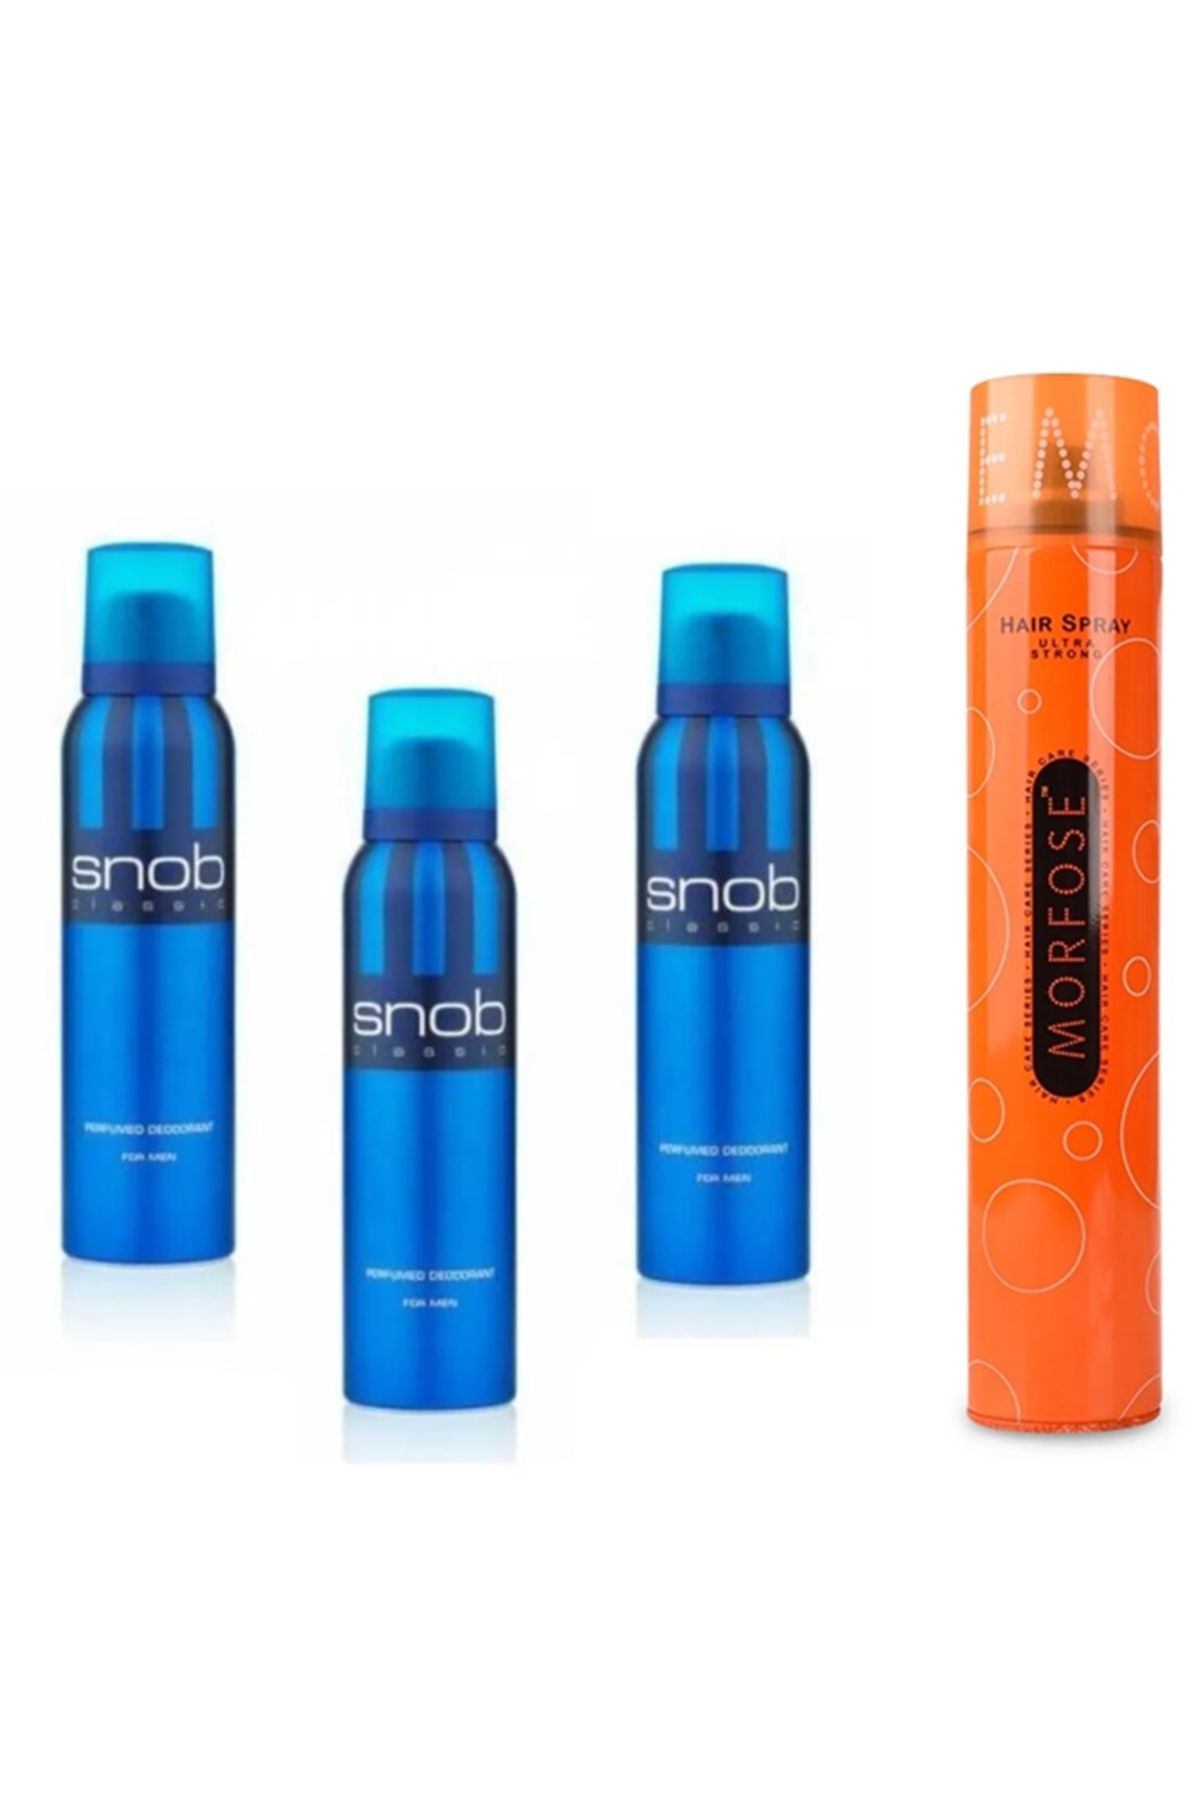 Snob For Men Classic Deodorant 150ml X 3 Adet + Morfose Ultra 400 Ml Sert Saç Spreyi 1 Adet